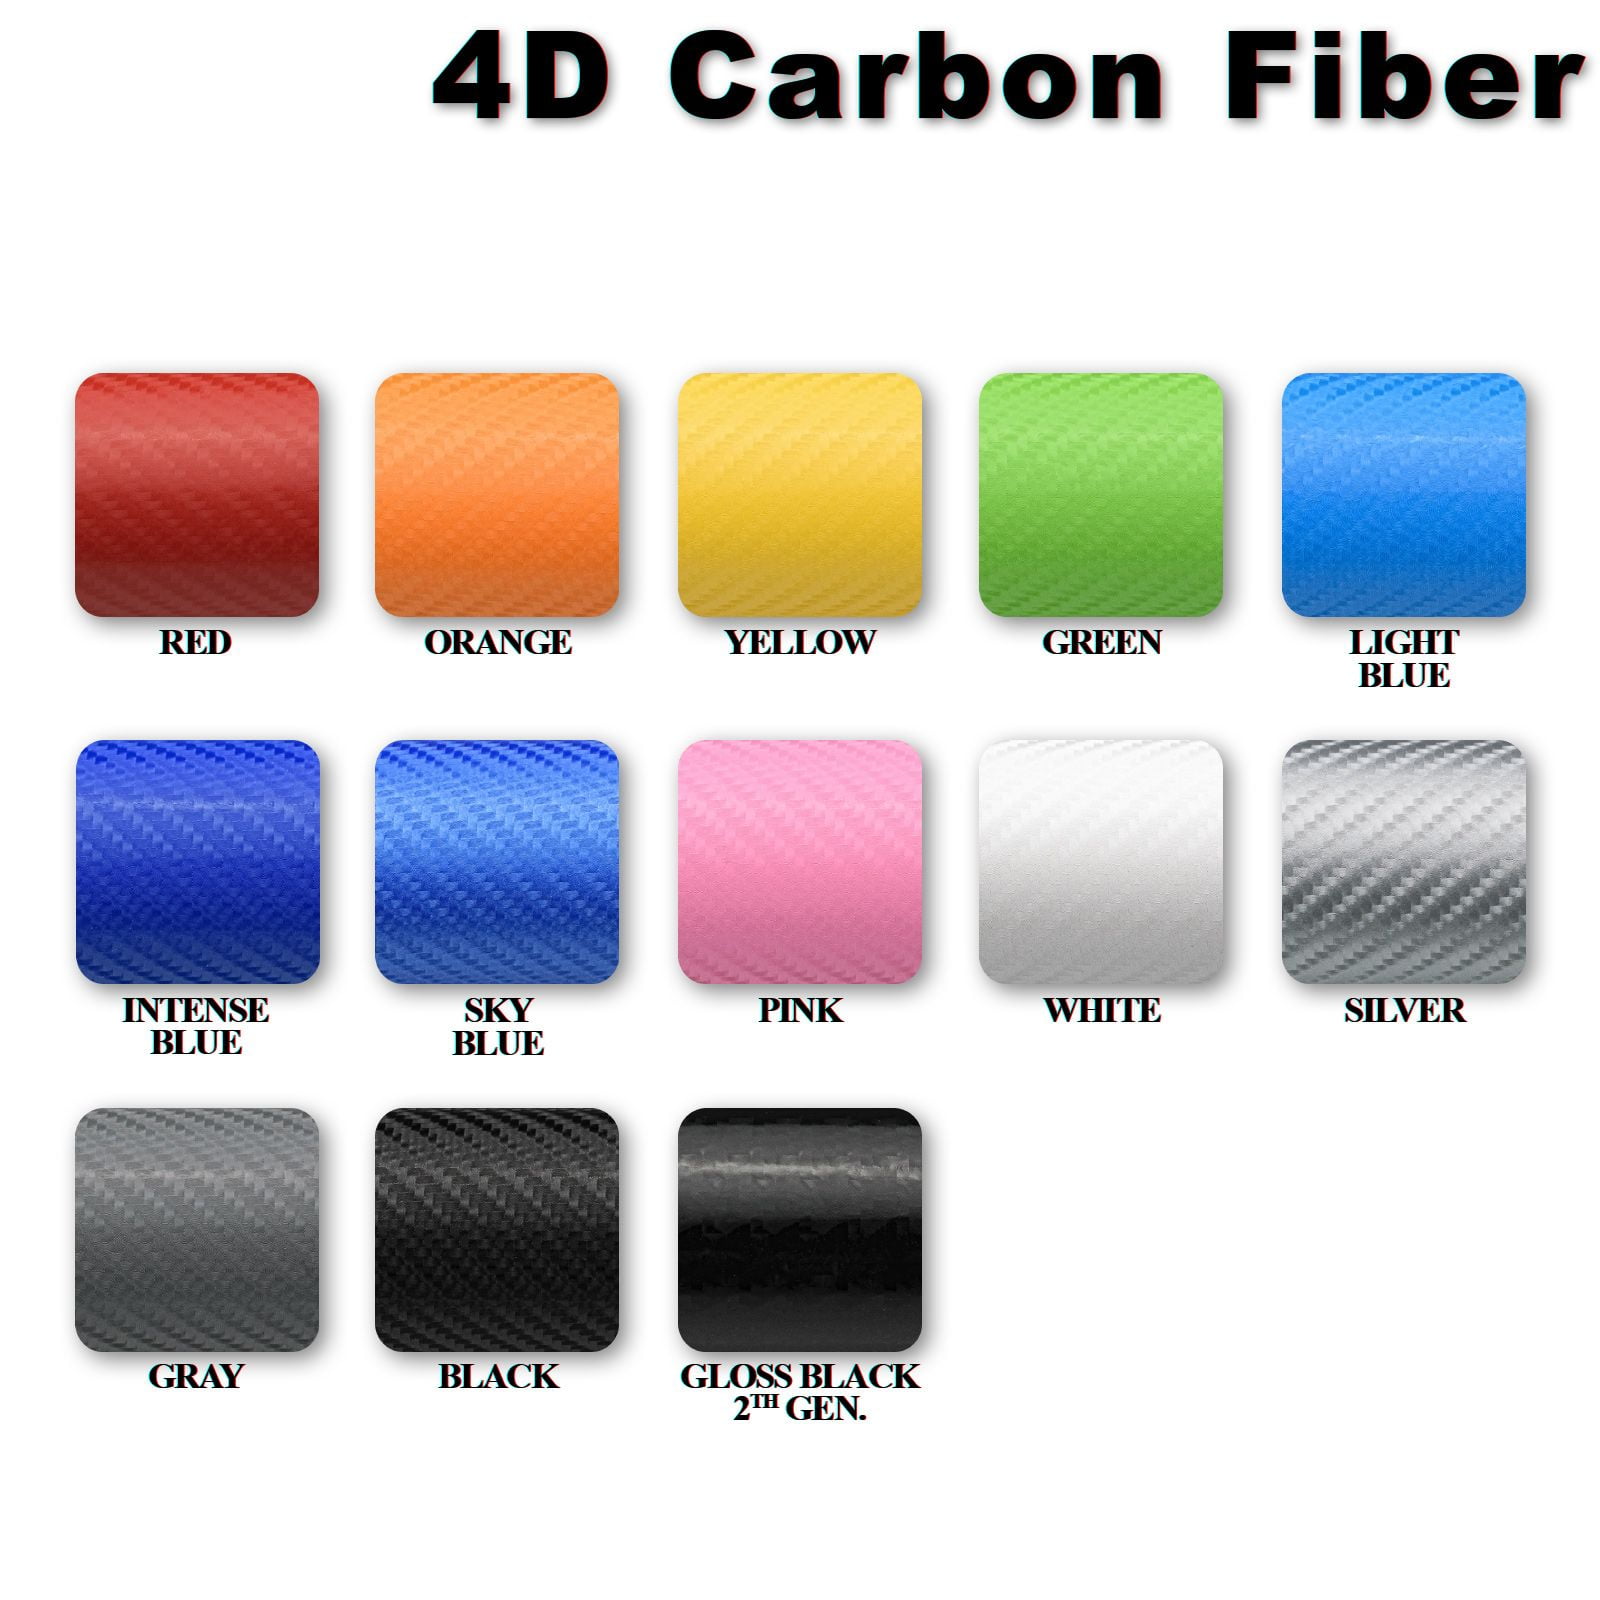 4X8 Sample 10cm x 20cm EZAUTOWRAP Sample Black 5D Carbon Fiber High Gloss Car Vinyl Wrap Sticker Decal Film Sheet Bubble Free Air Release Technology 